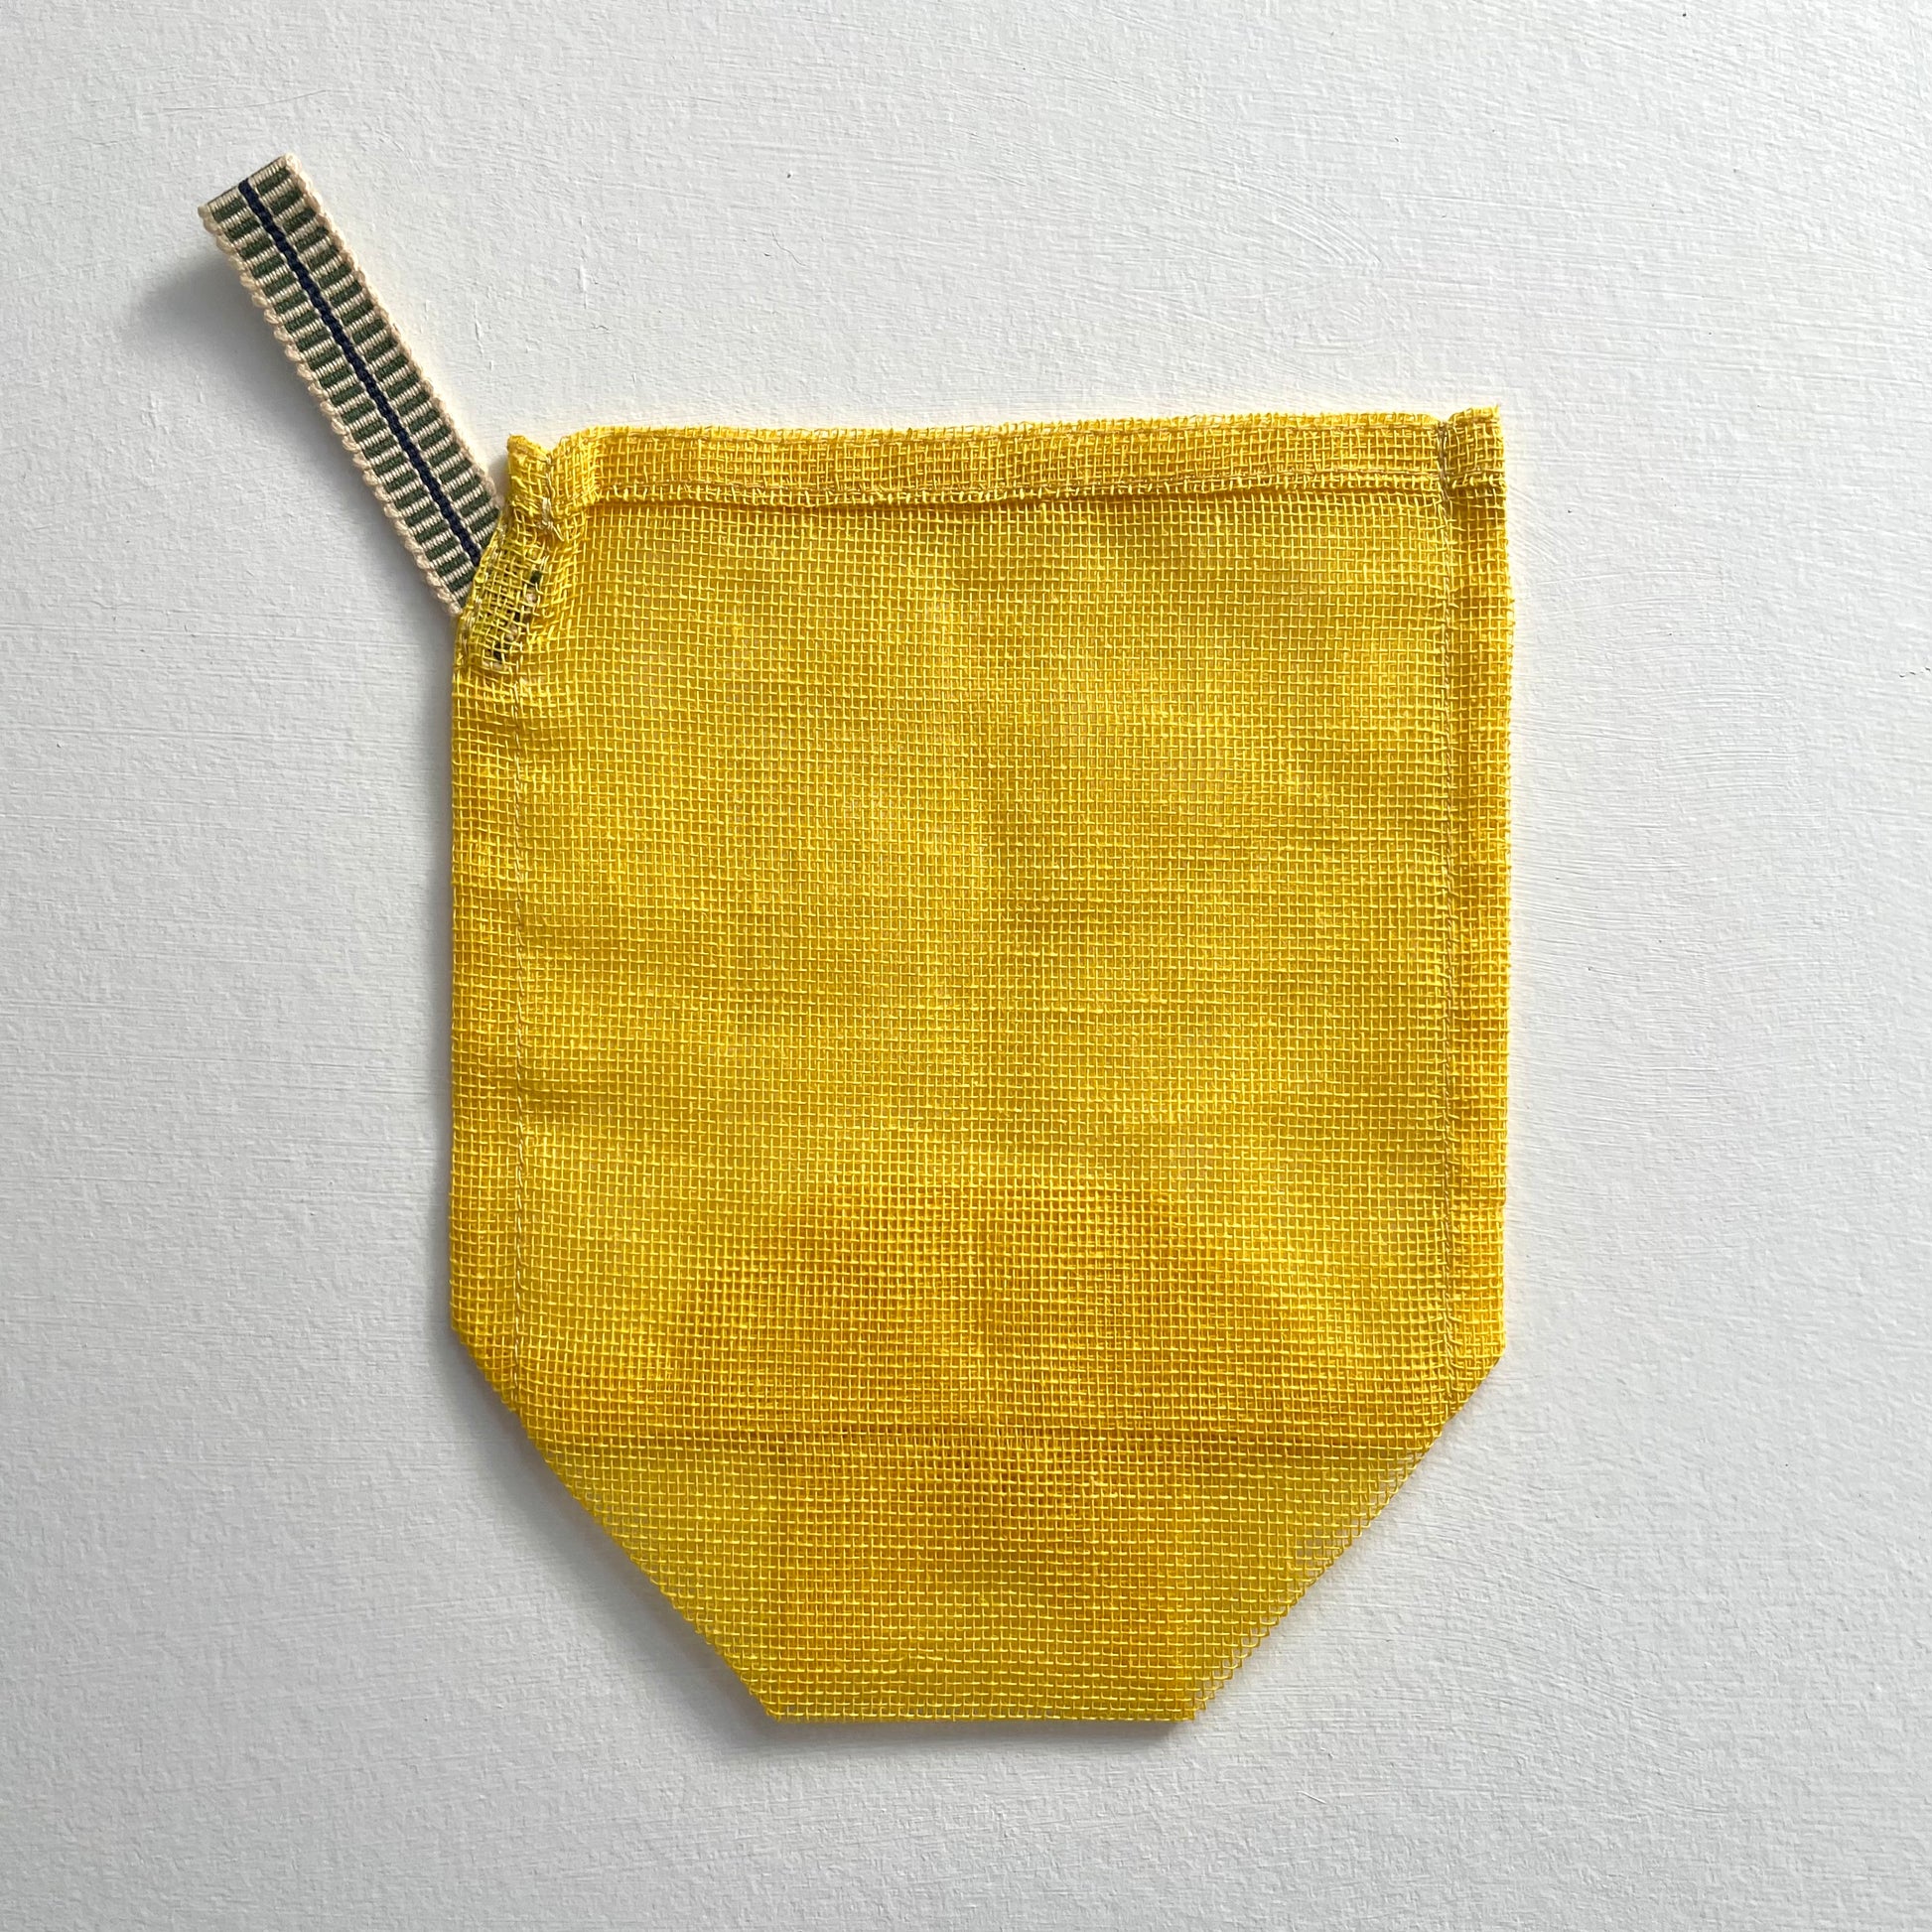 yellow small 100 percent cotton mesh mosquito net yellow small eco produce bag